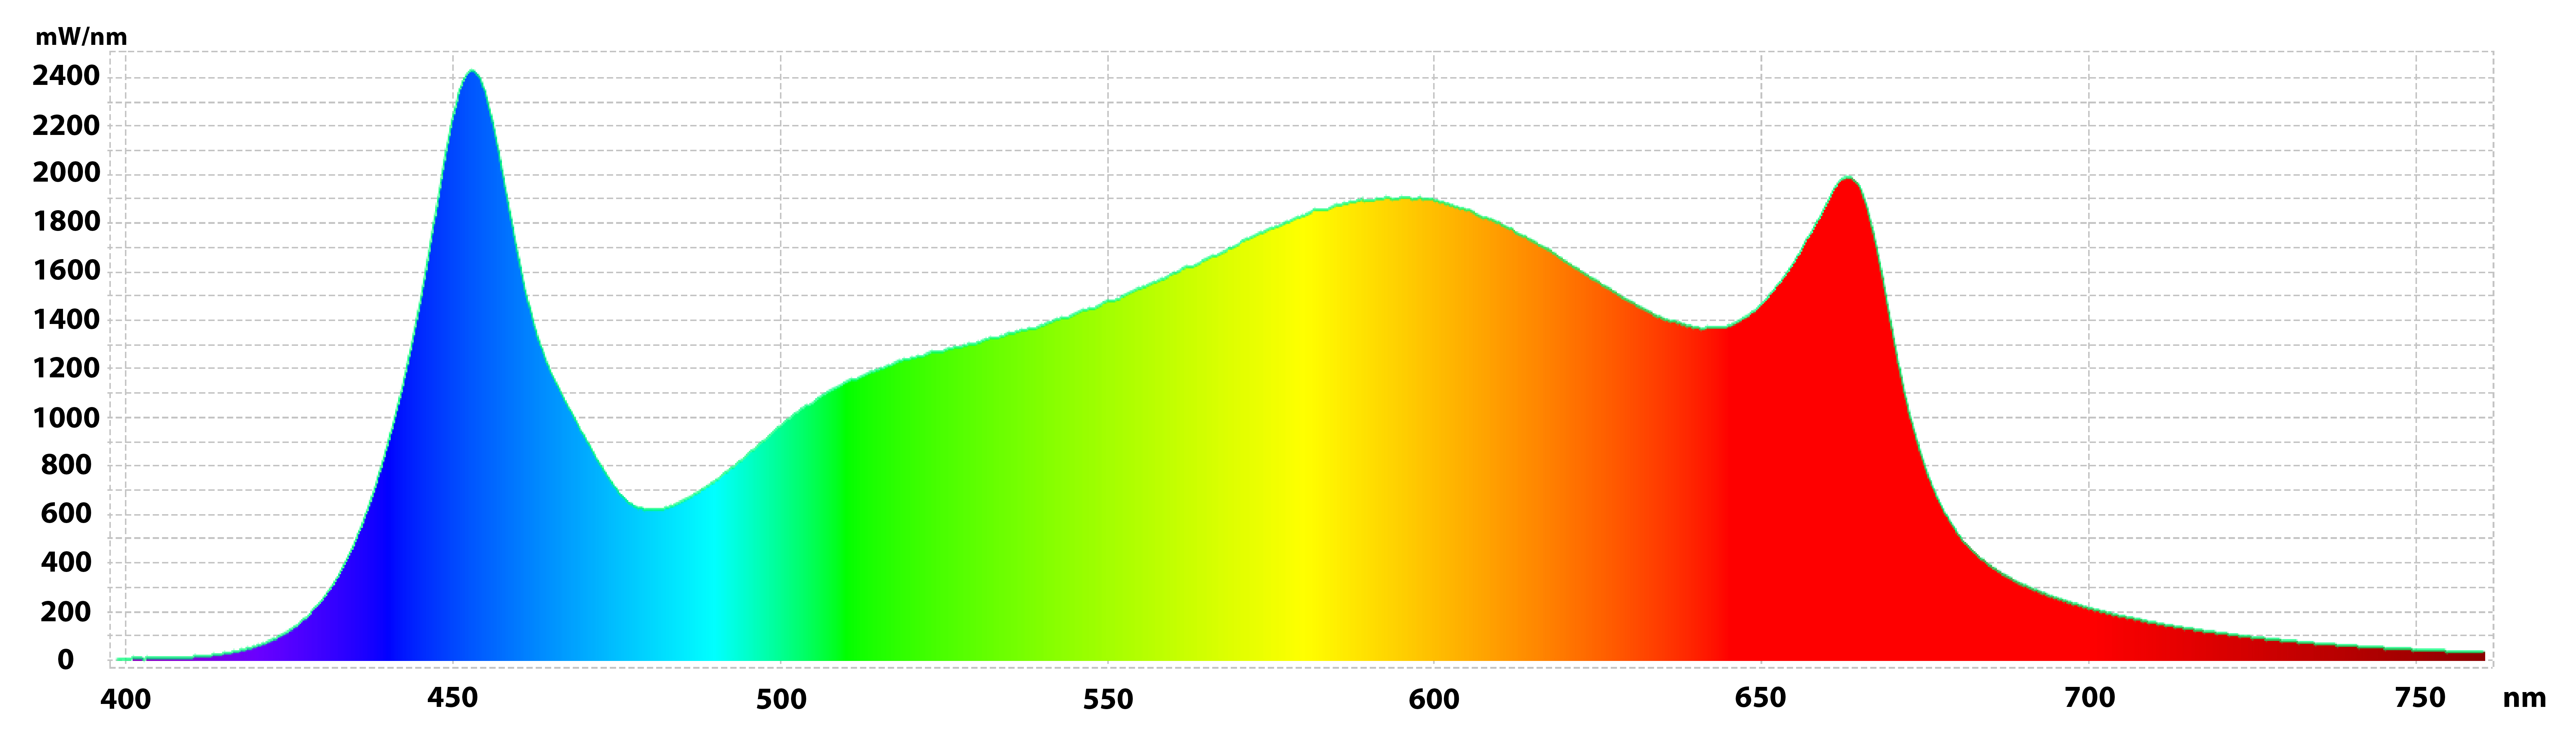 1700_Spectrum-Graph-01.png